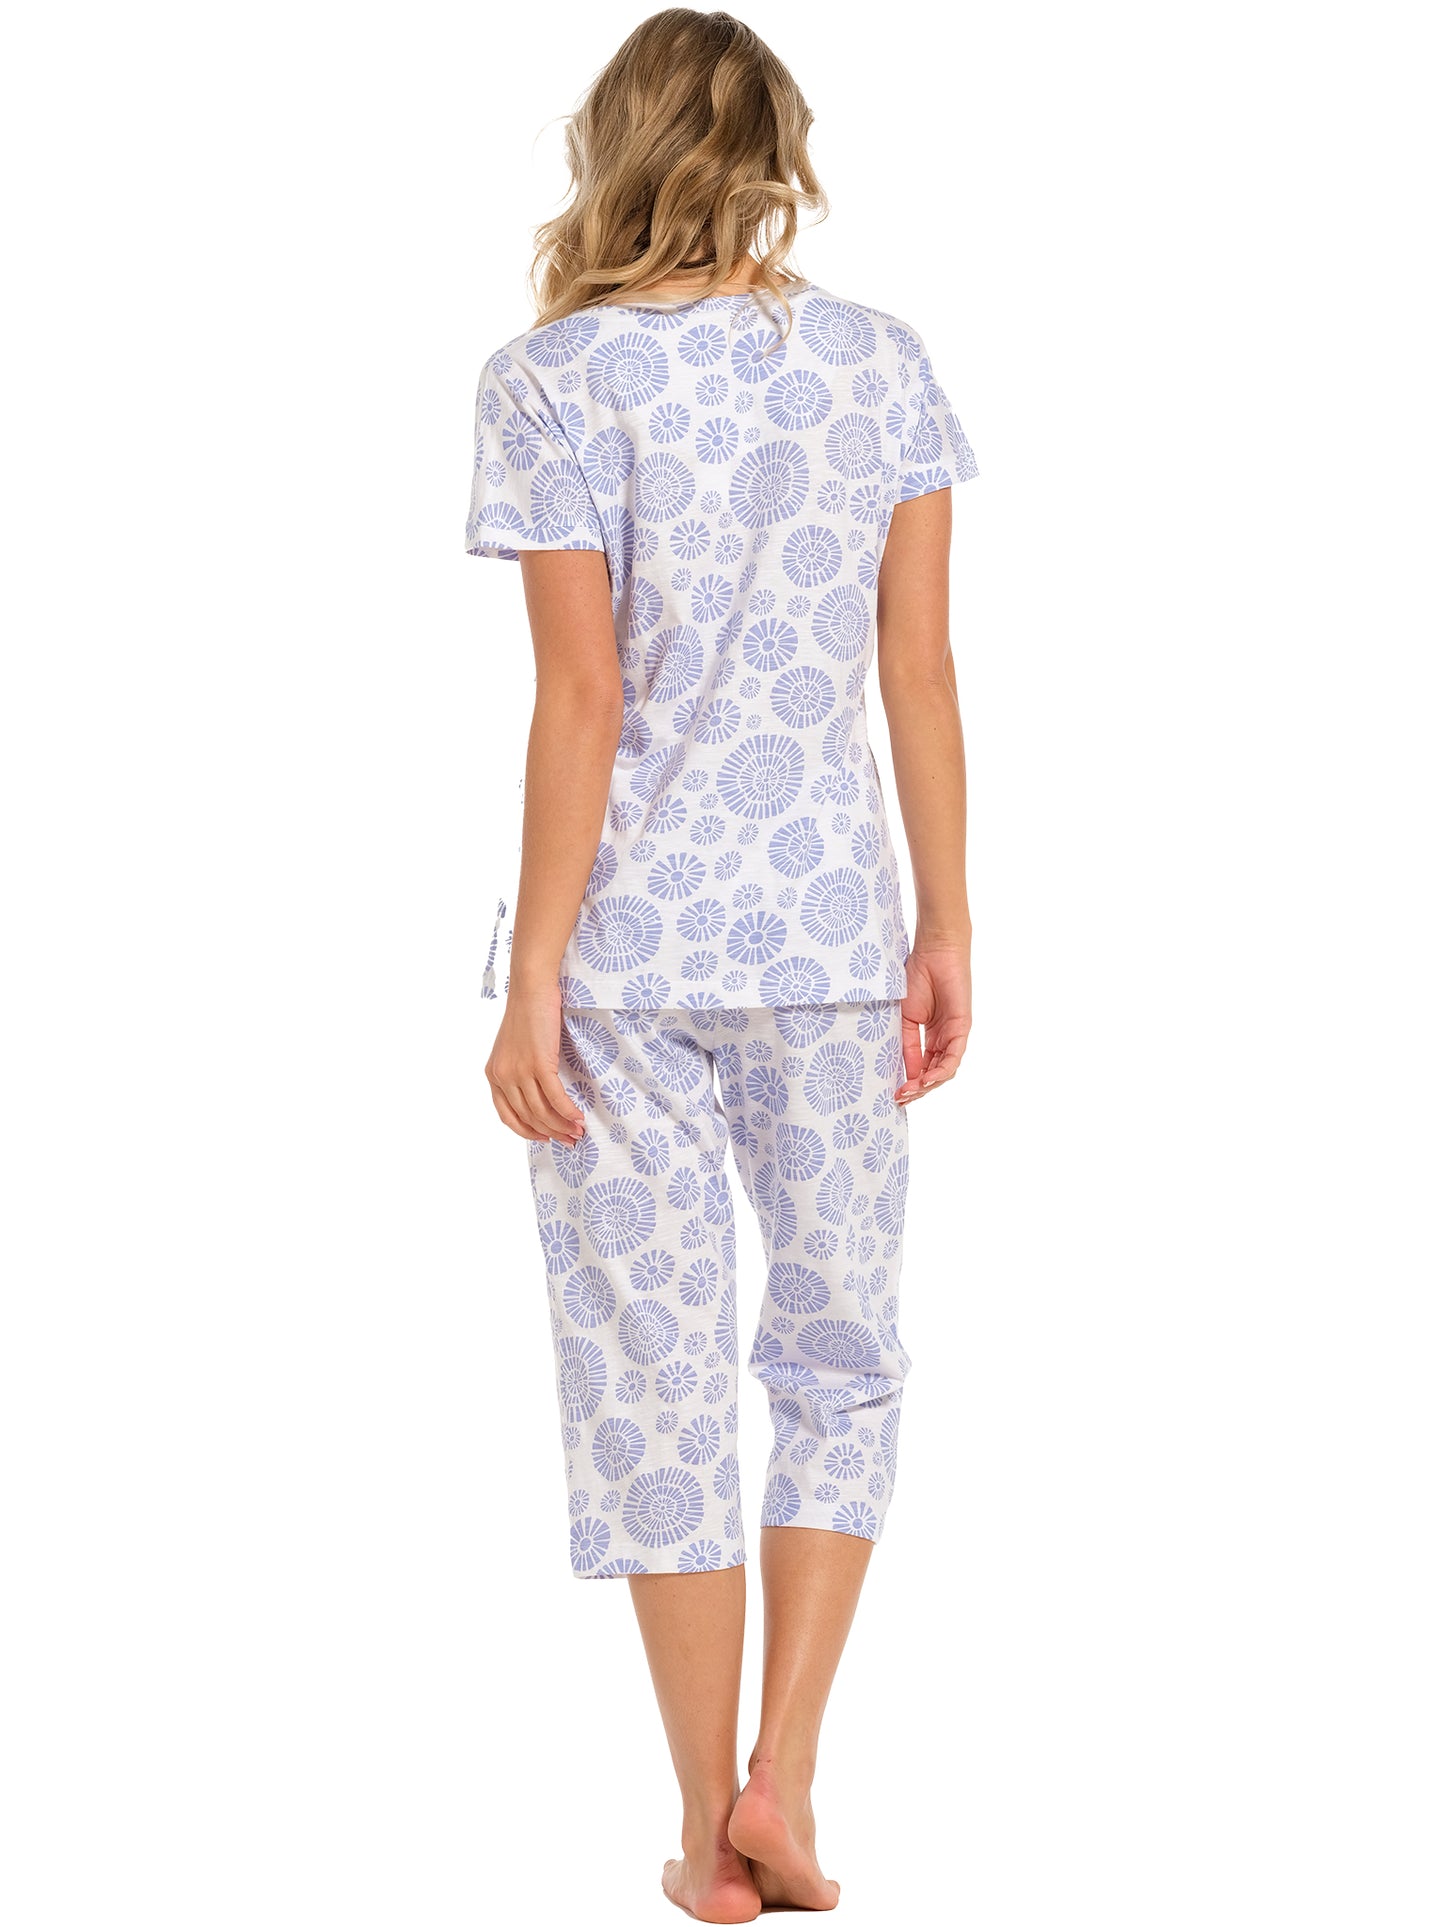 Pyjama capri pants 20241-110-2 506 light